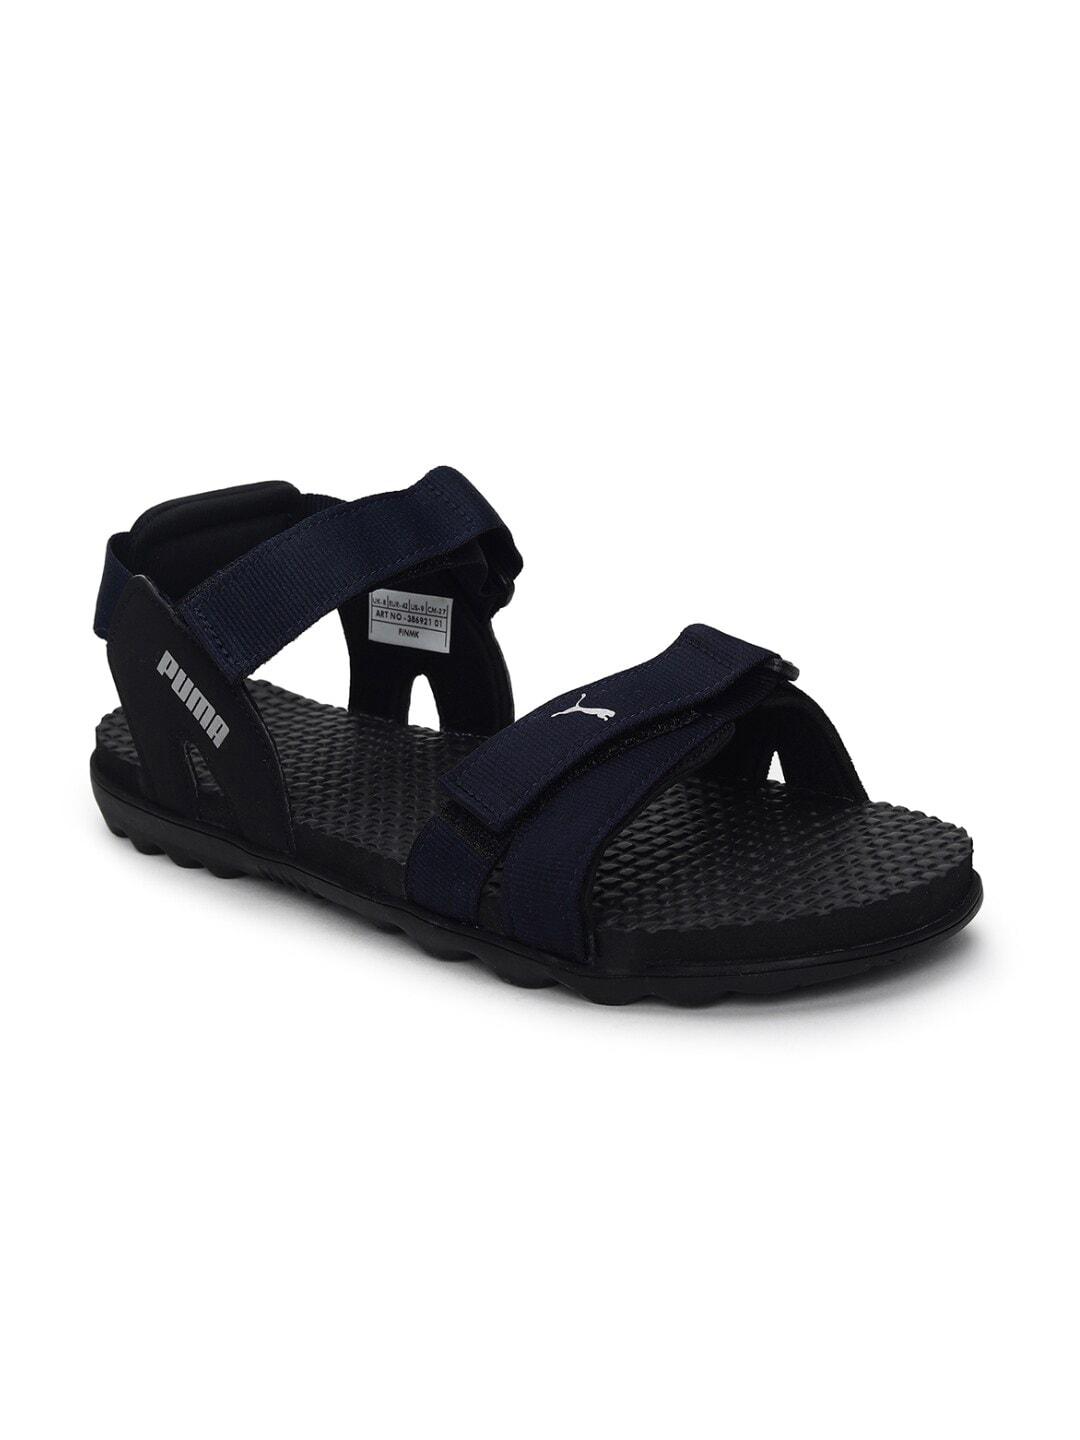 puma-men-black-smooth-comfort-sandals